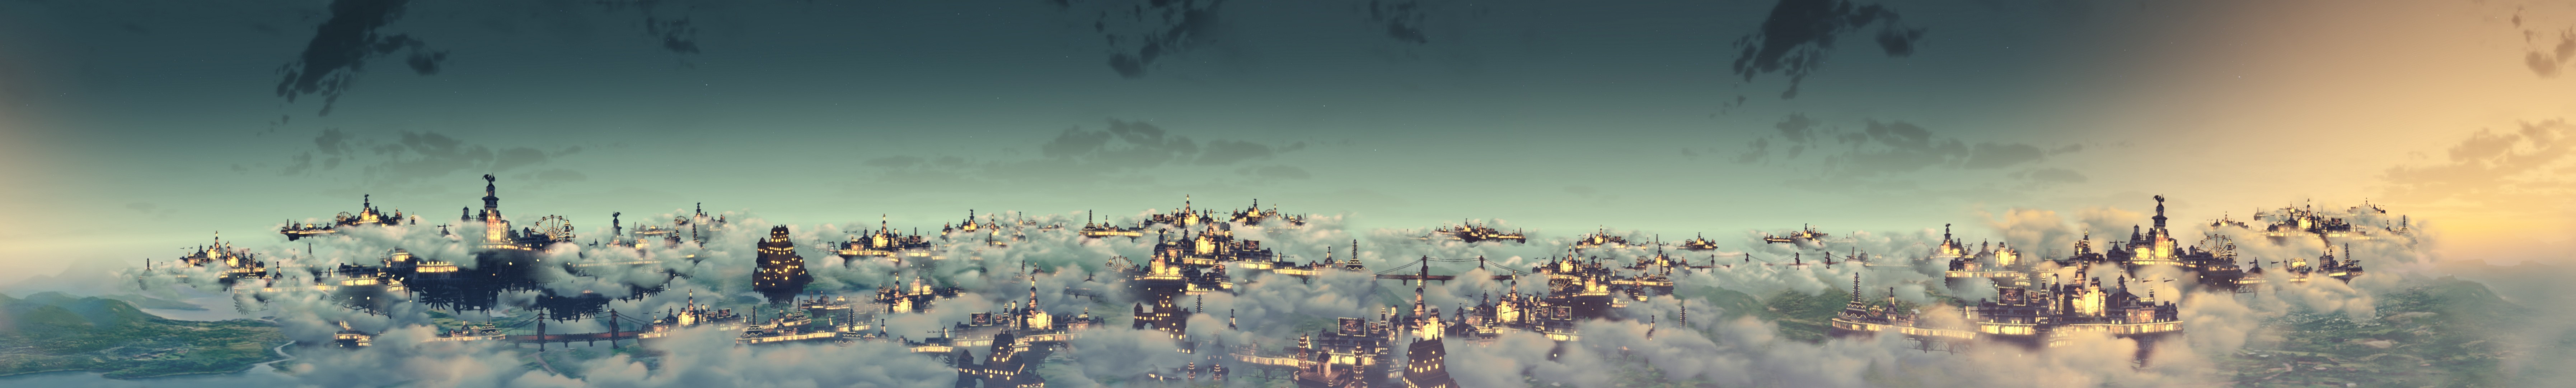 BioShock Infinite Colombia Artwork Video Games Clouds City Panoramas BioShock 7178x1080